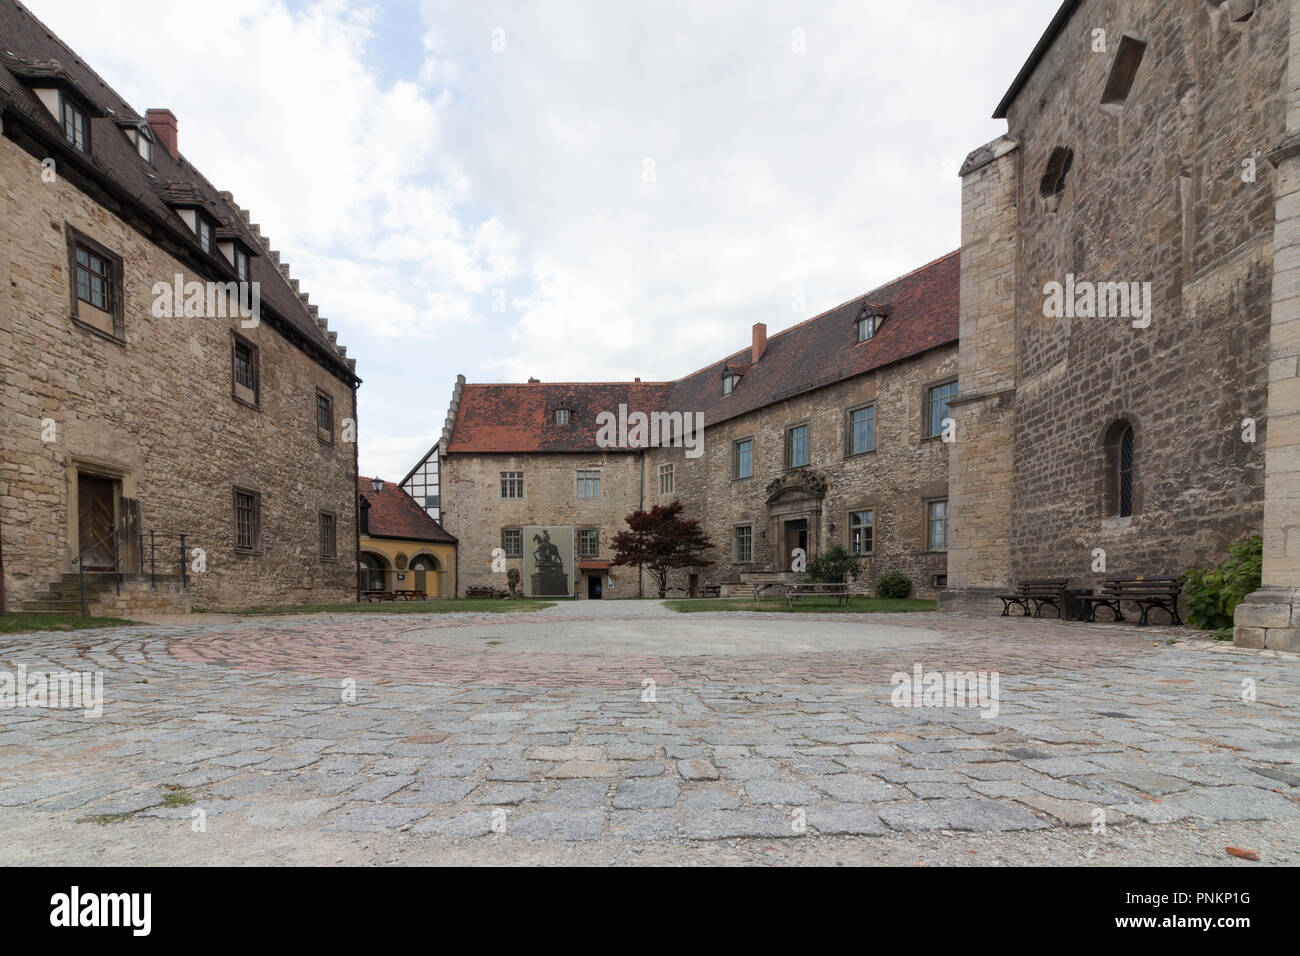 Freyburg, Germany - September 15, 2018: View into the courtyard of Schloss Neuenburg in Freyburg, Germany. Stock Photo